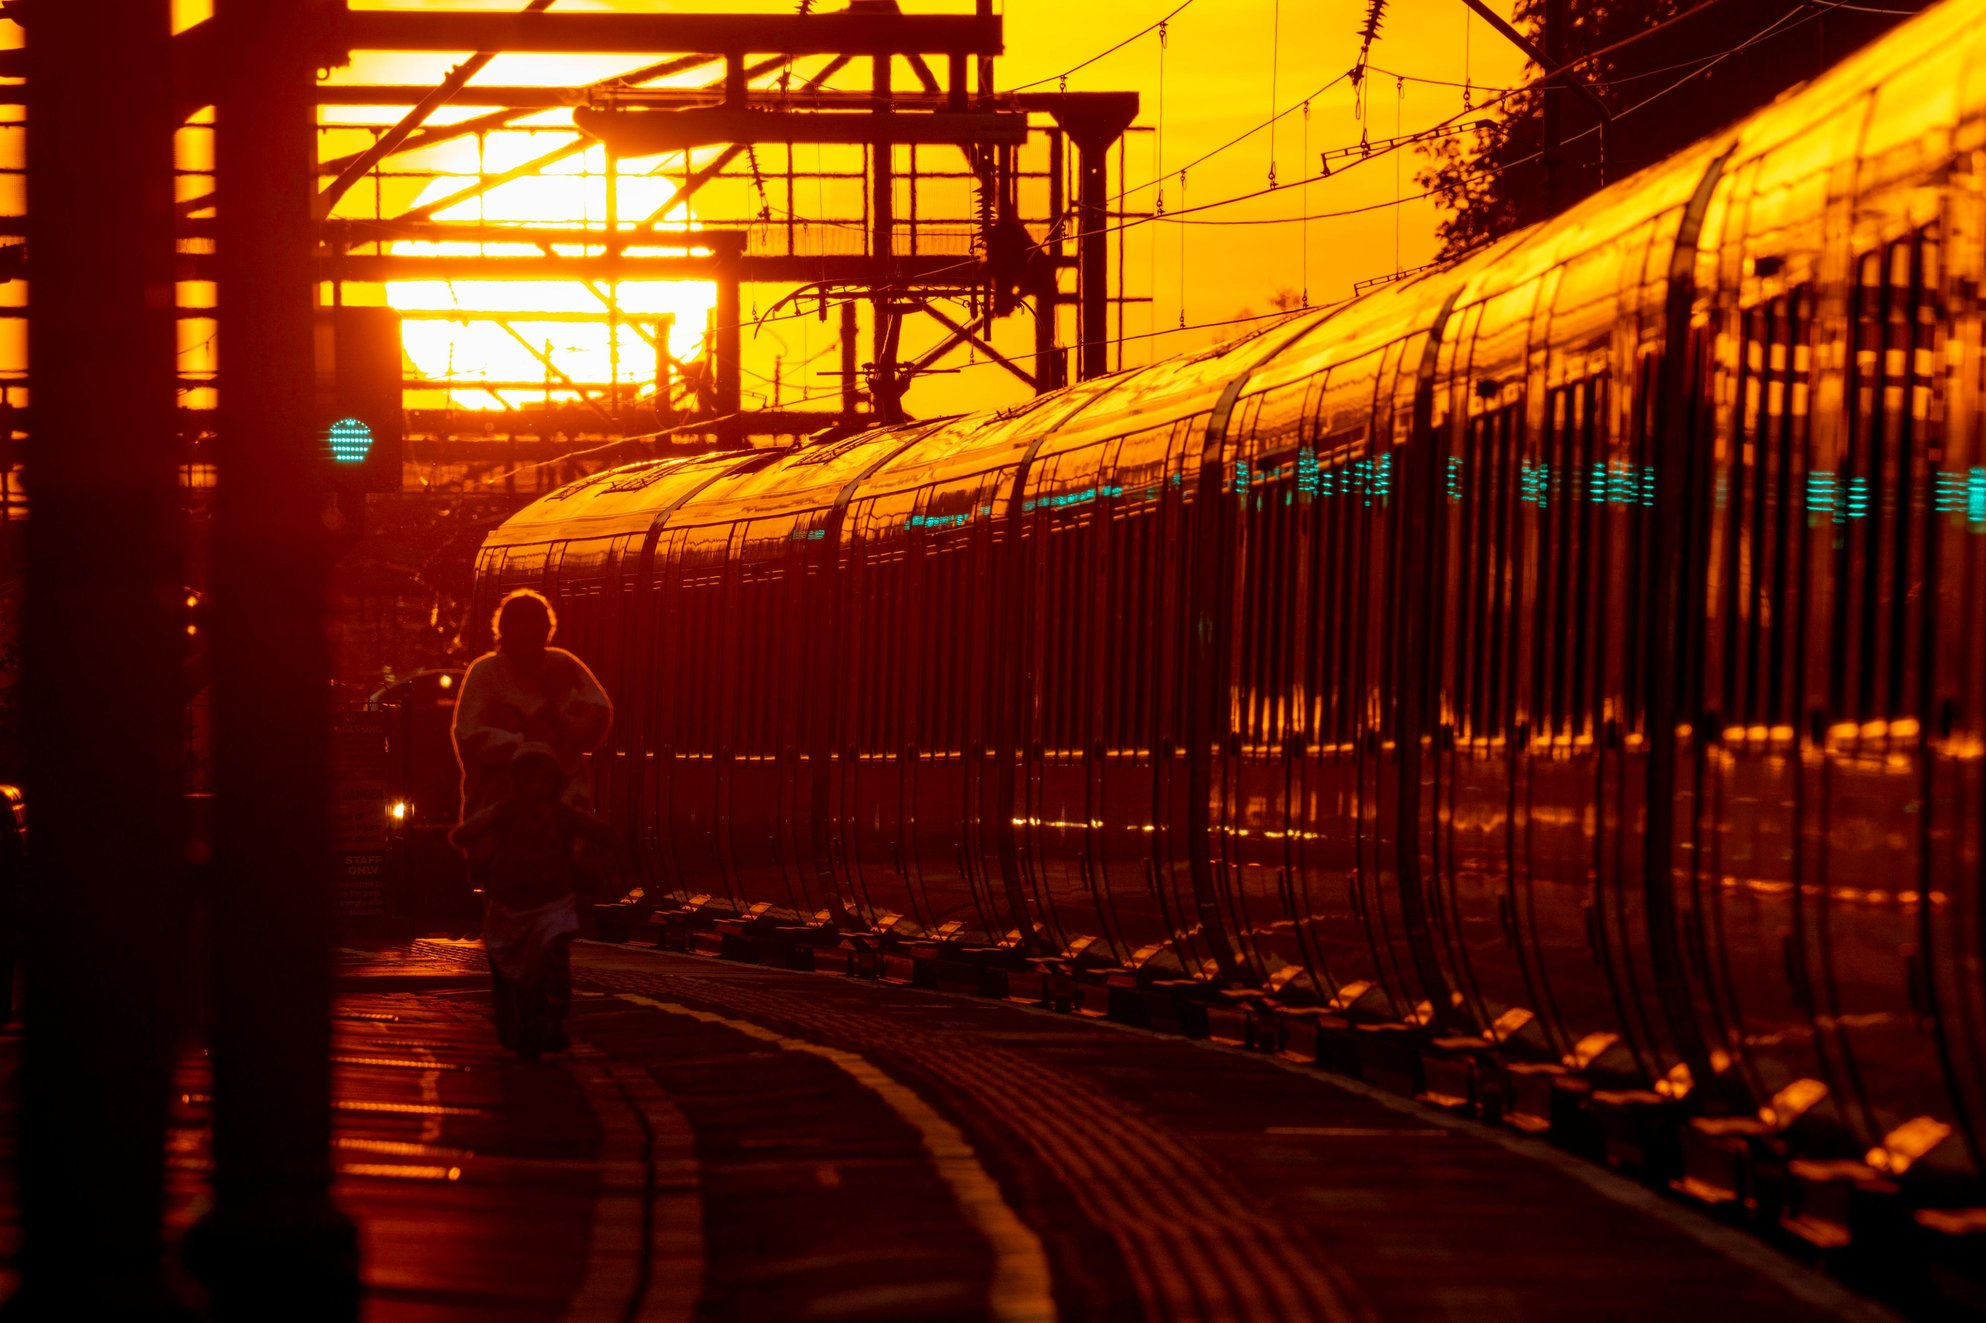 Train at station bathed in deep orange sunset